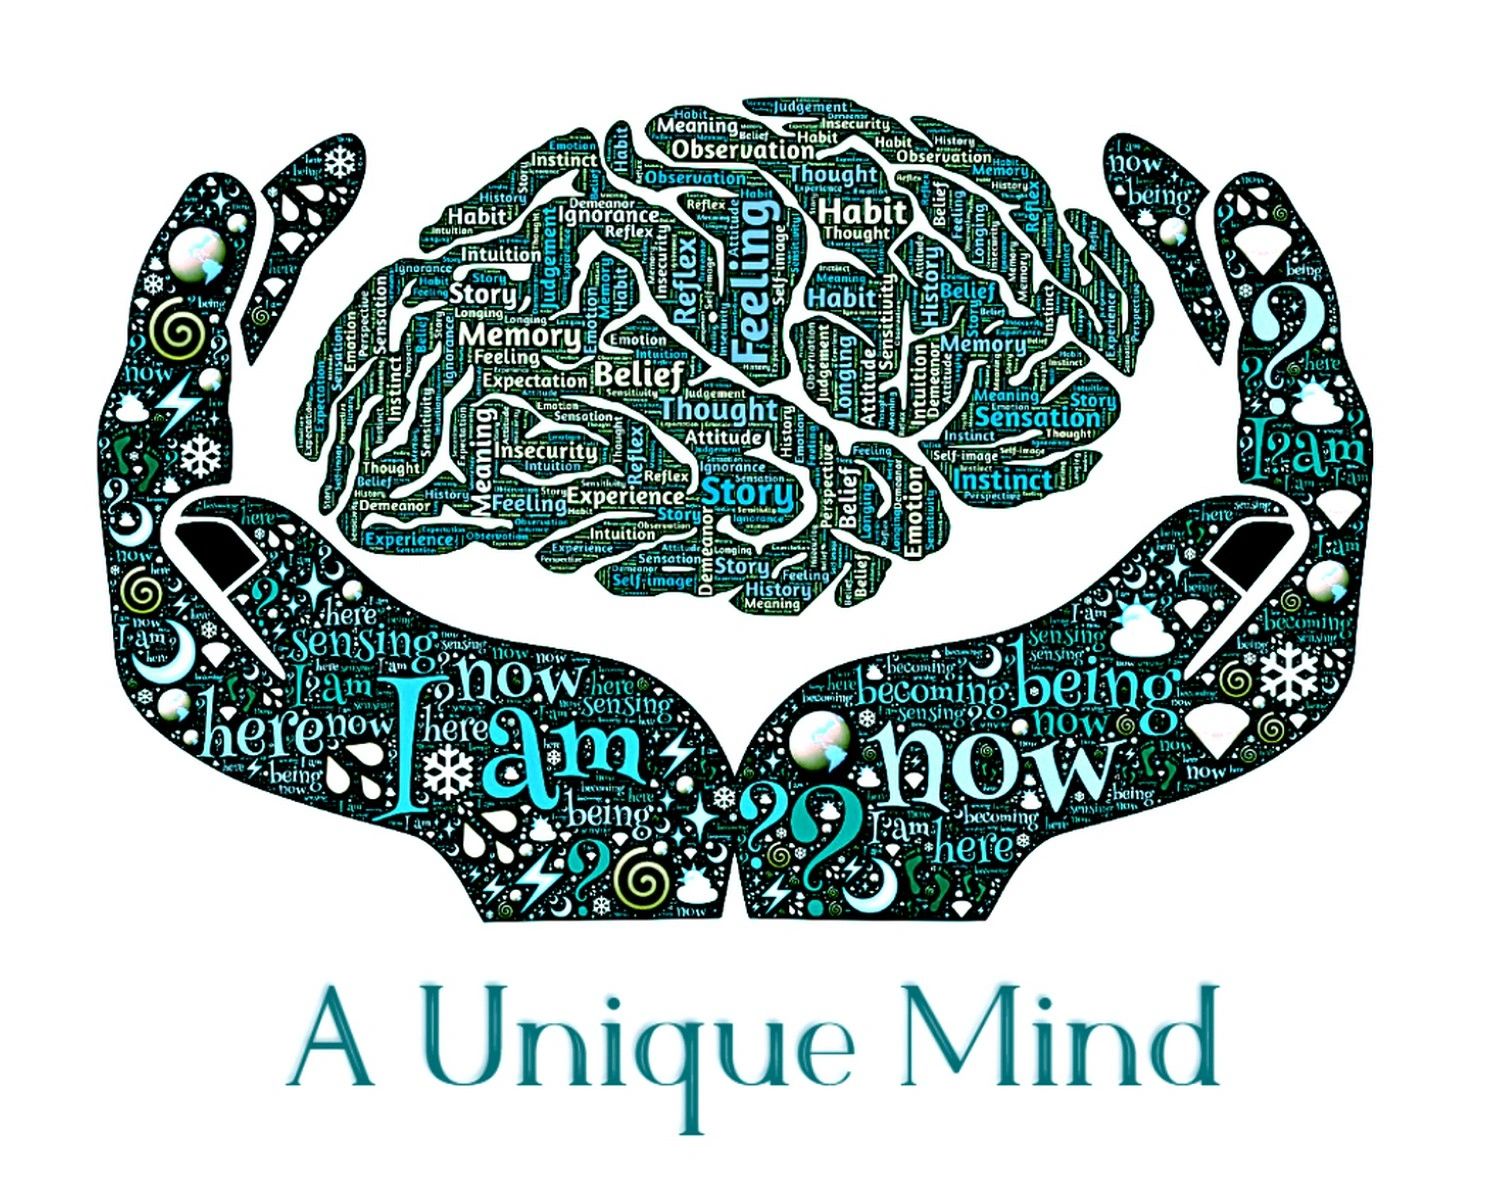 The singular Mind книга. Singular Mind. Unique things